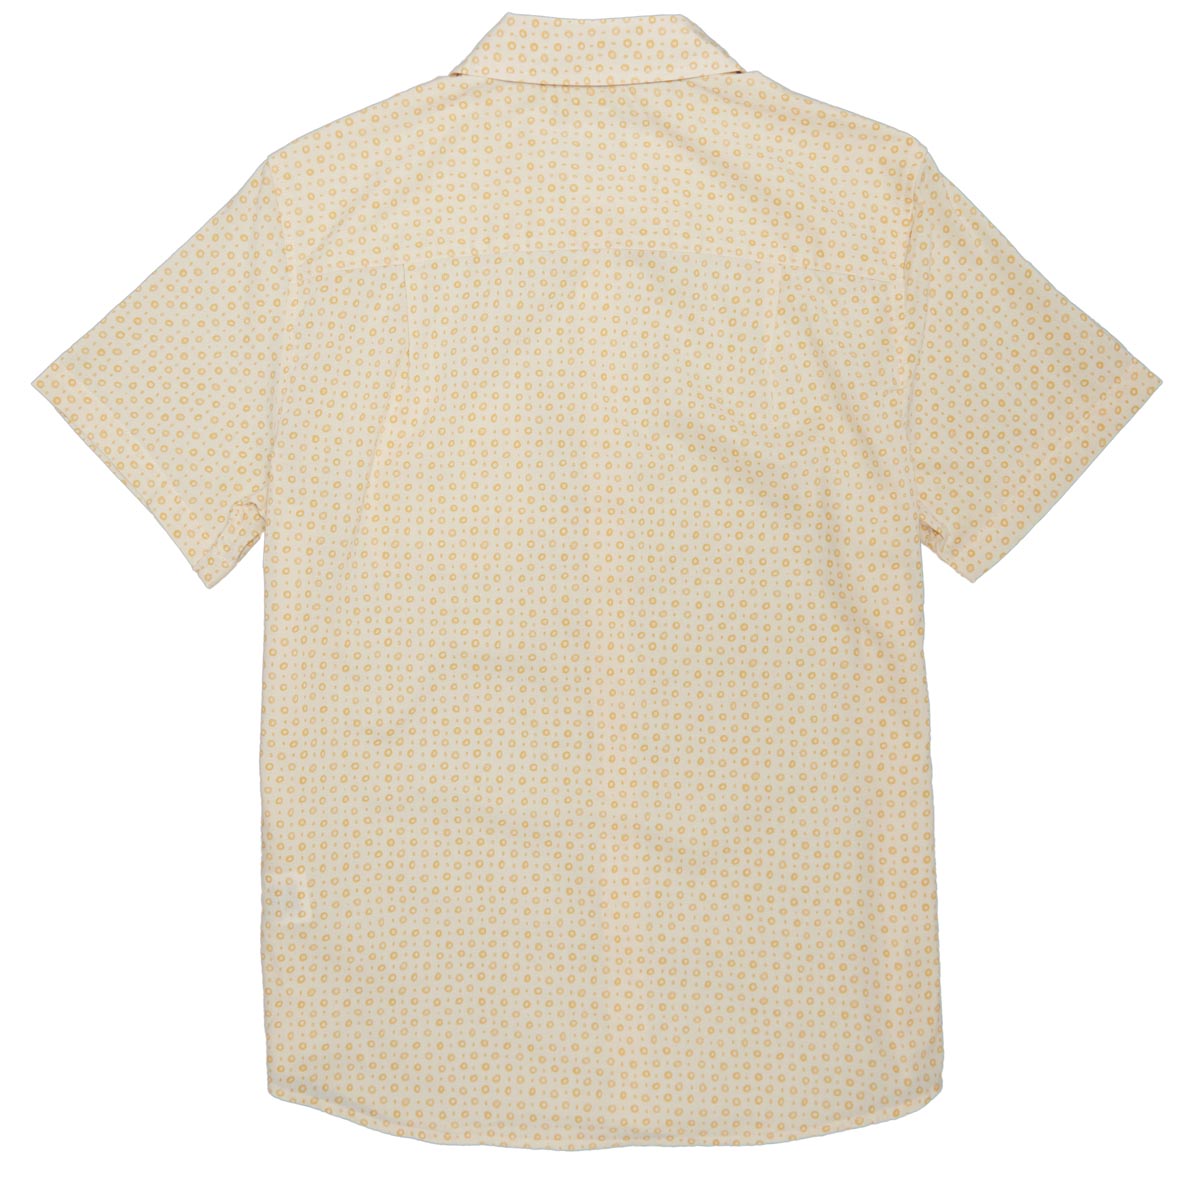 Brixton Charter Print Shirt - Whitecap Micro image 2